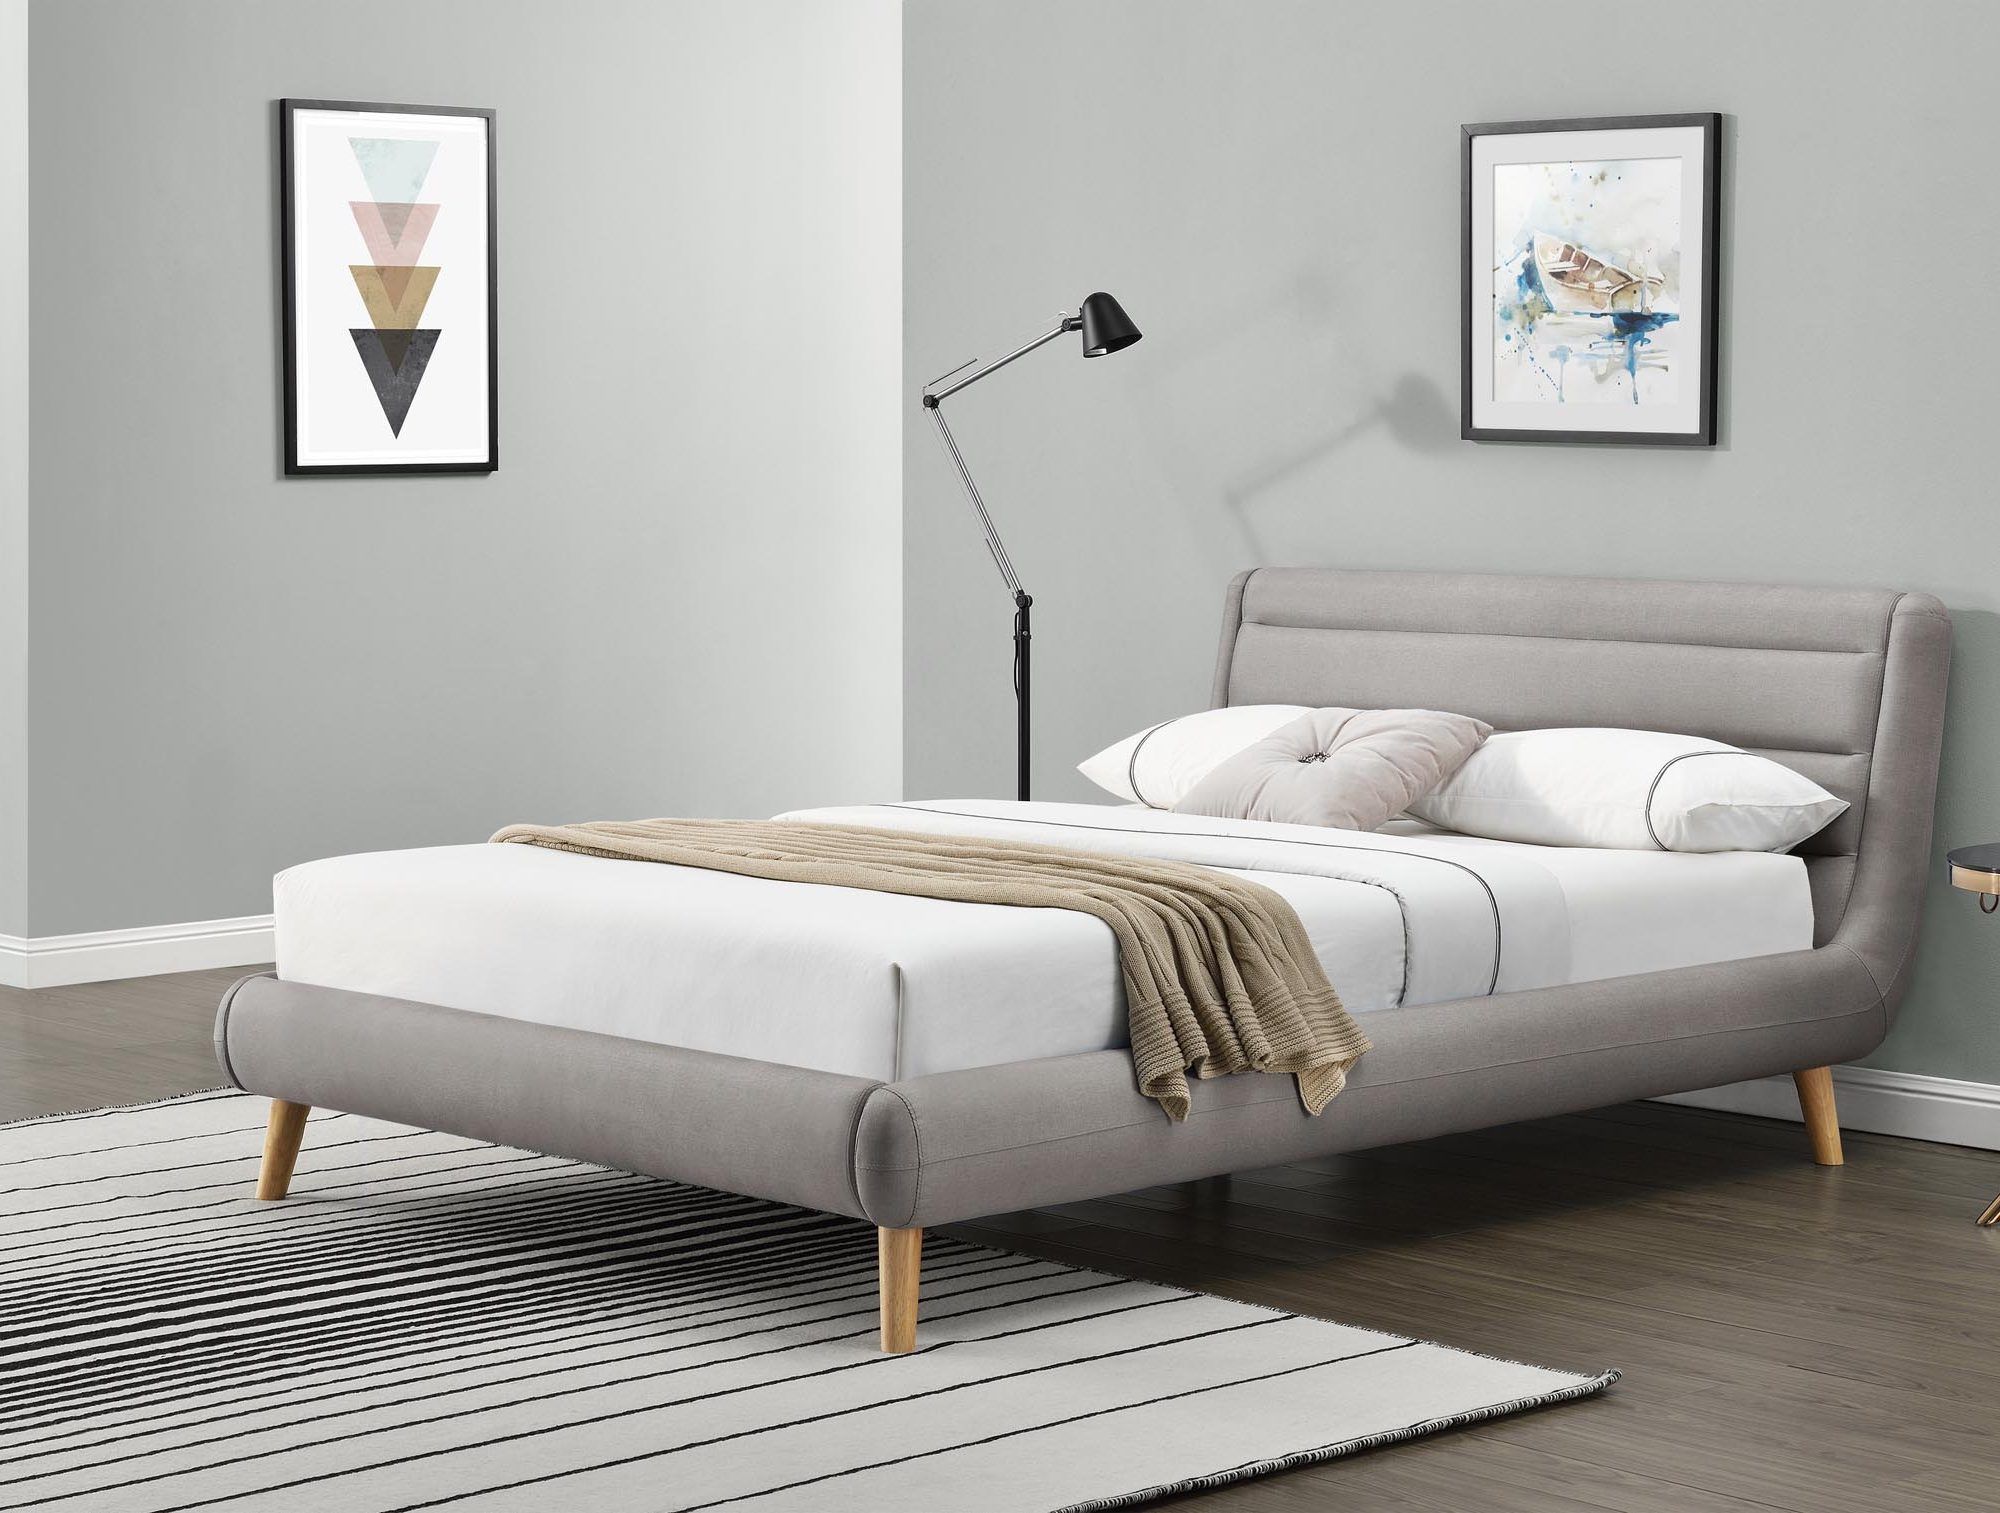 Manželská posteľ 160 cm Elanda (béžová) (s roštom)